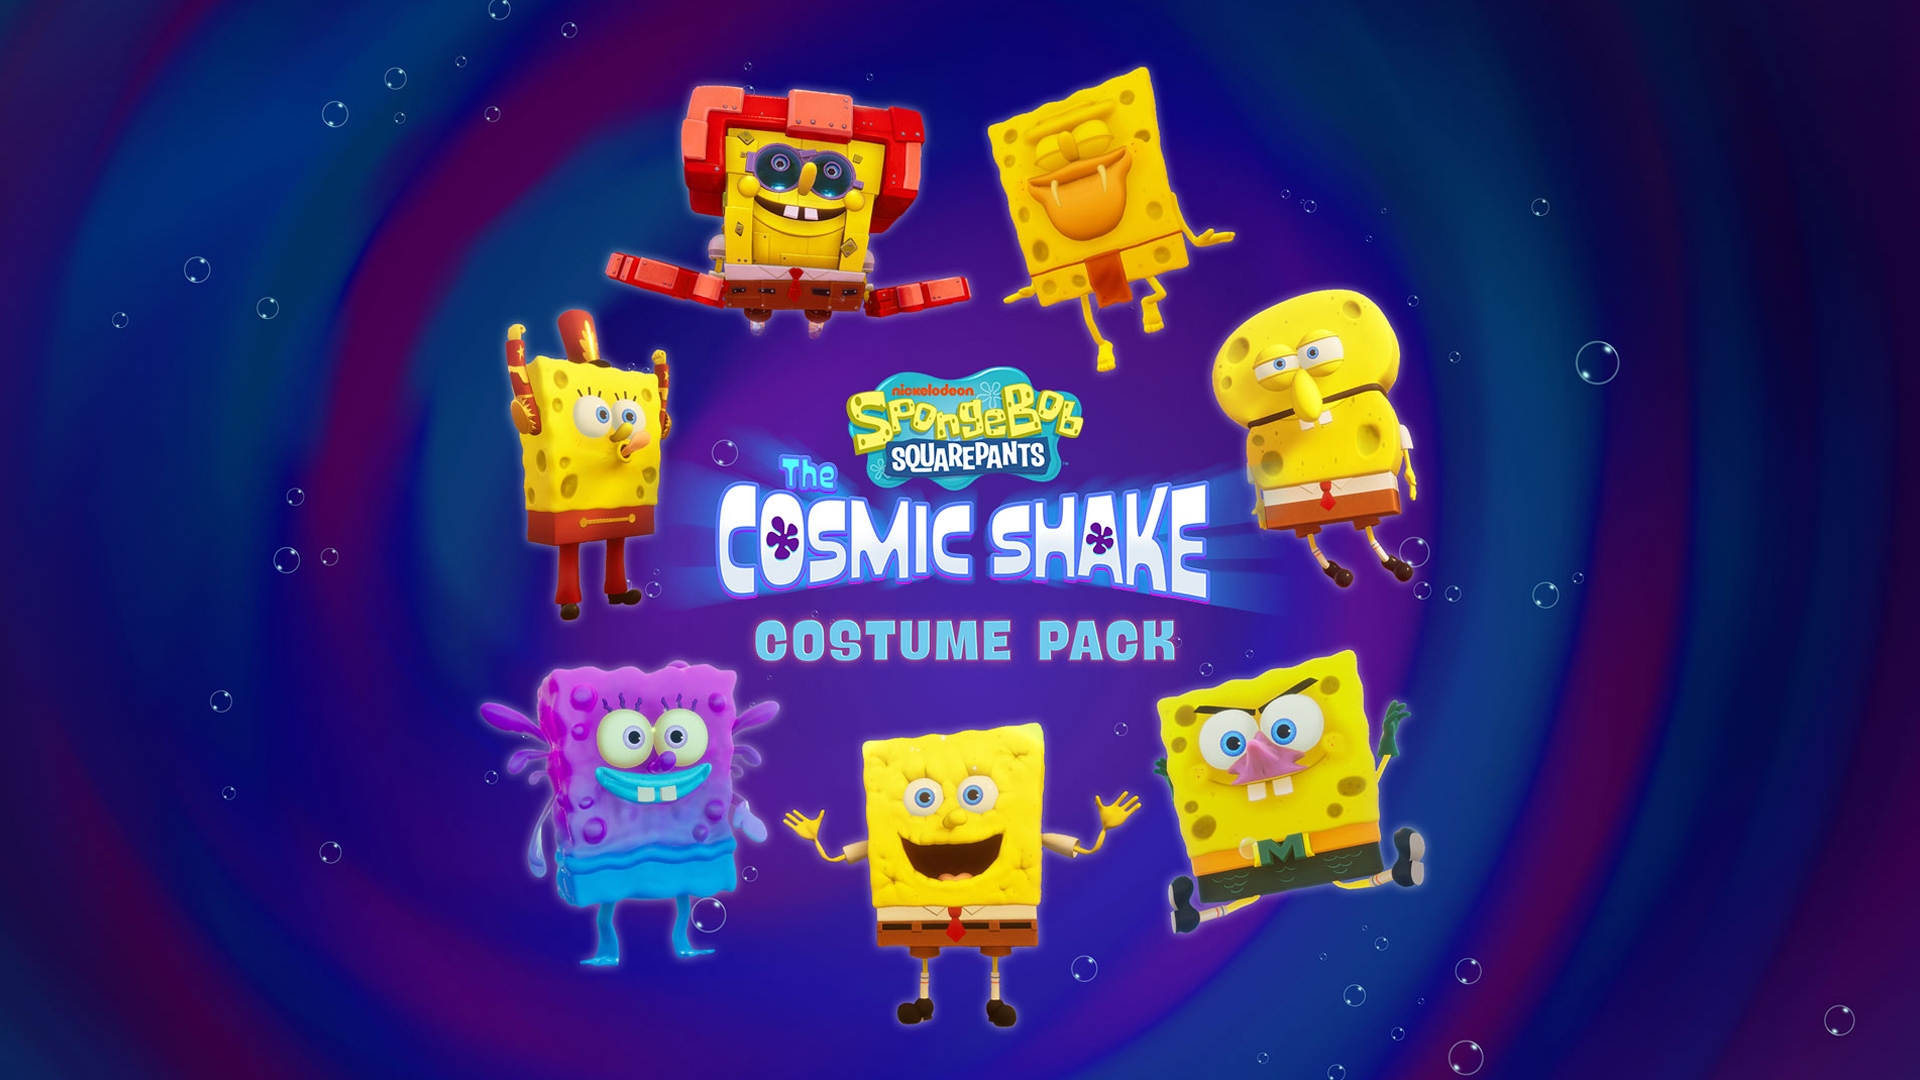 SpongeBob SquarePants: The Cosmic Shake - PlayStation 5